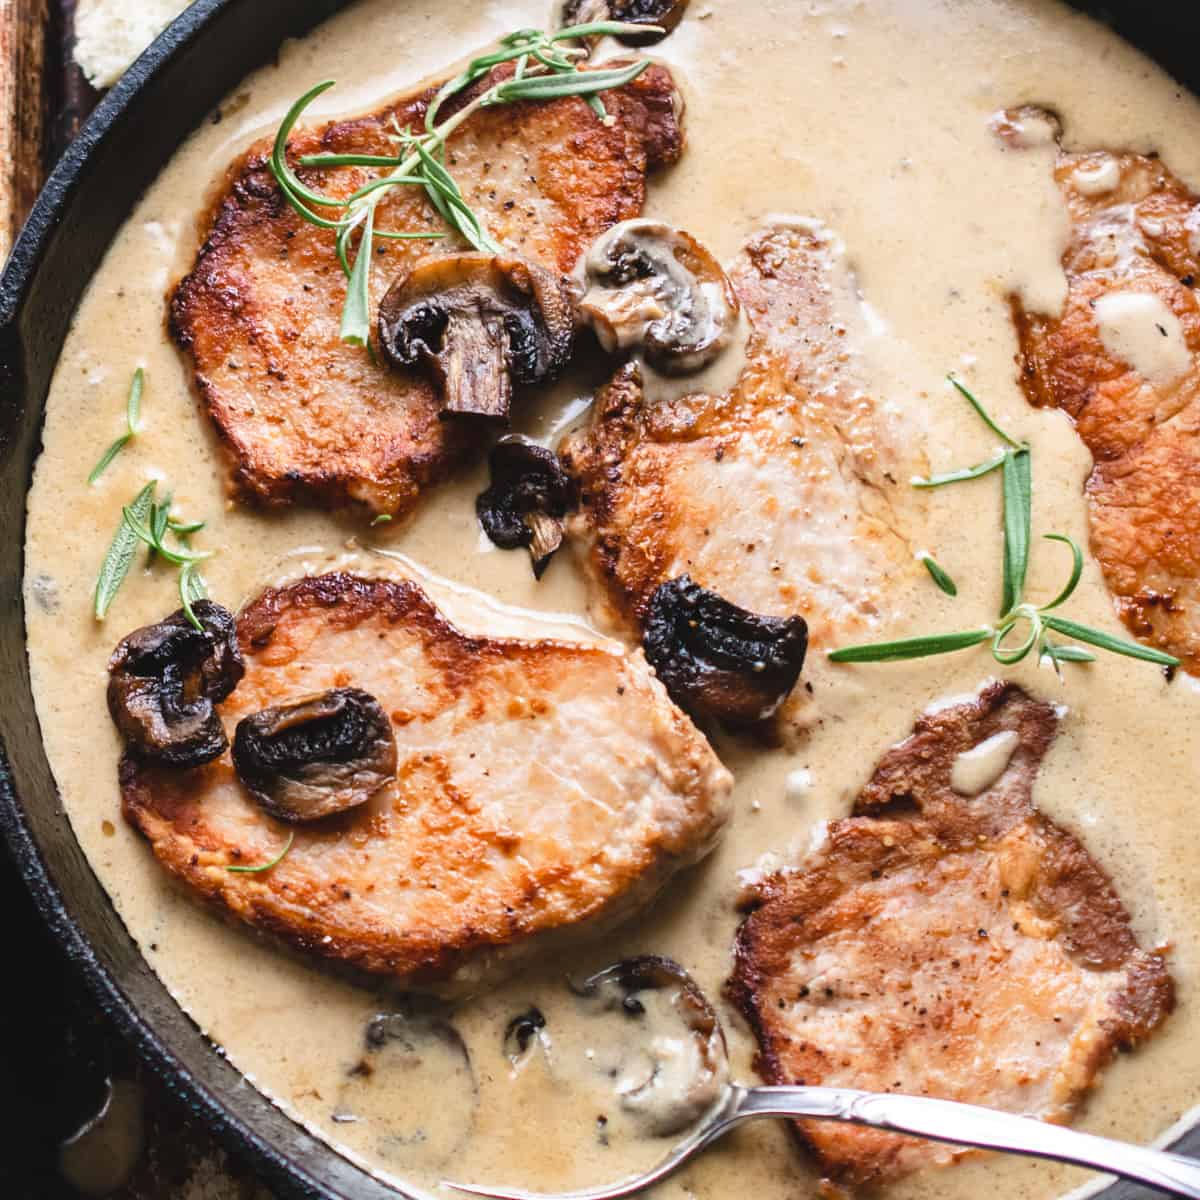 Boneless pork chops in cream of mushroom gravy with rosemary and a spoon.